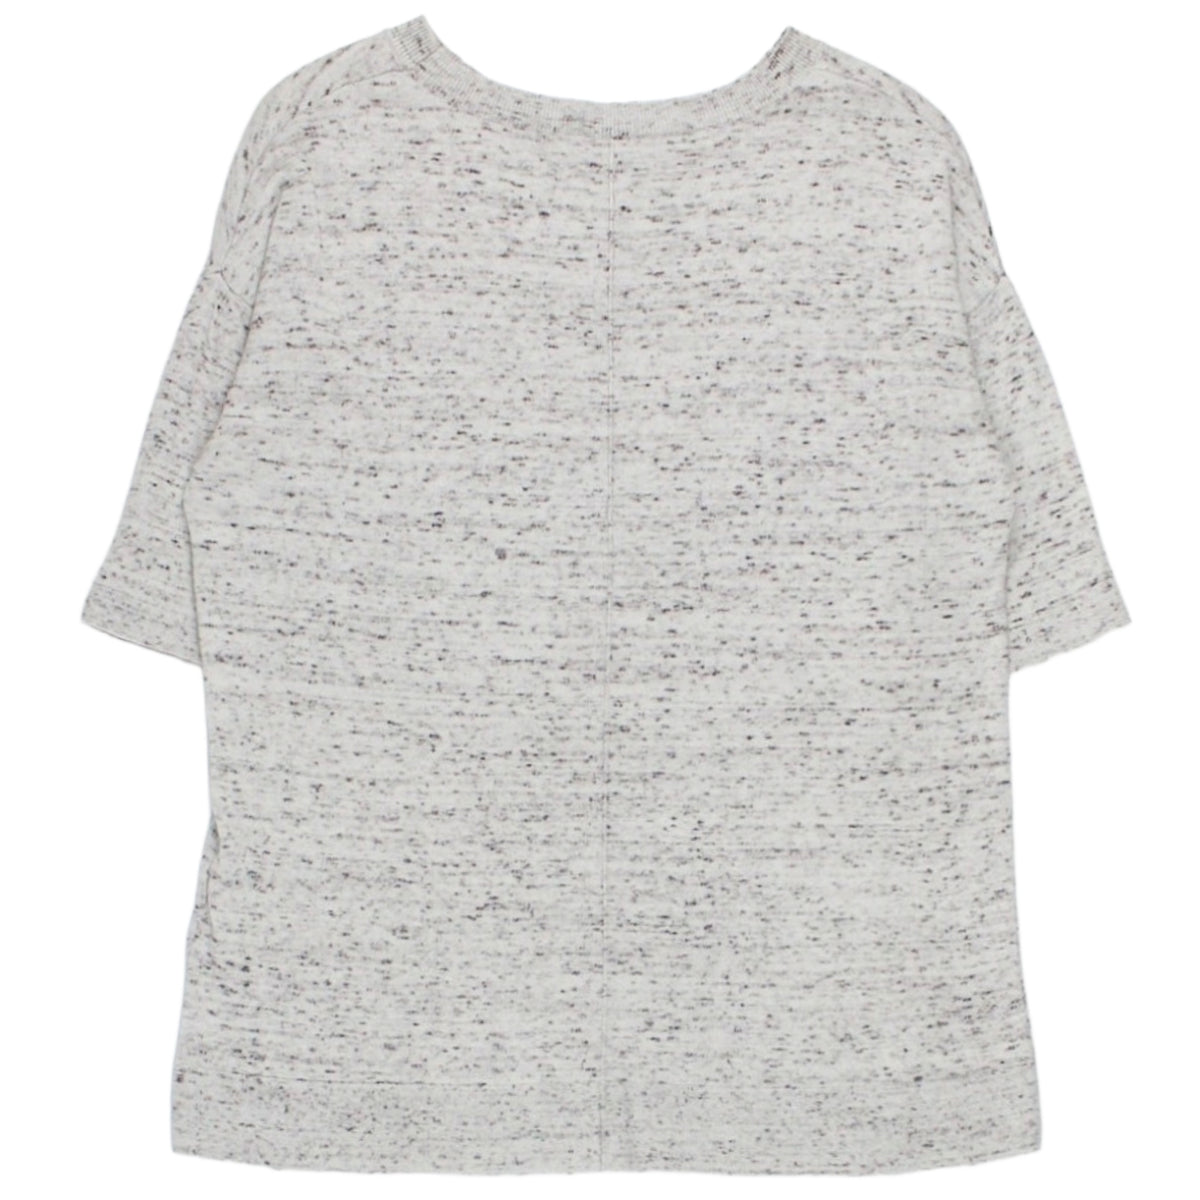 Reiss Grey Marl Knitted T-Shirt